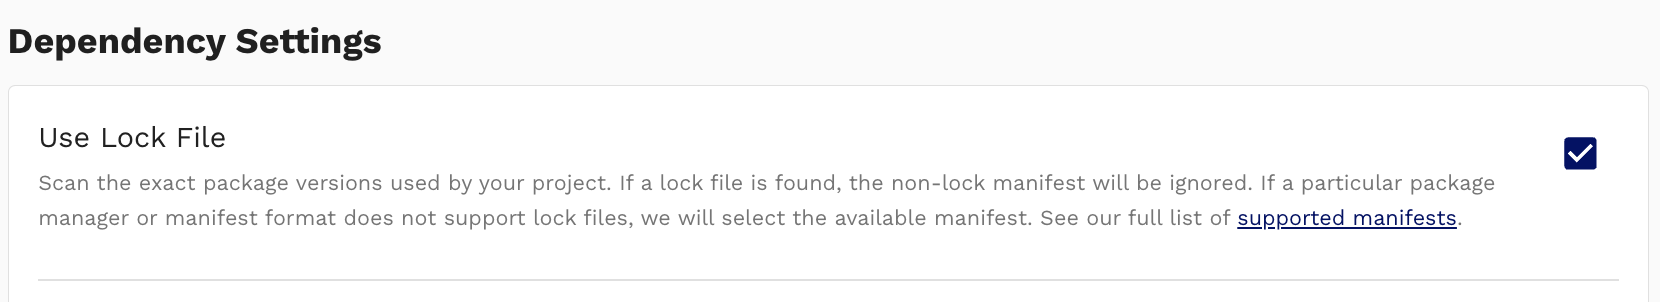 Use lock file setting